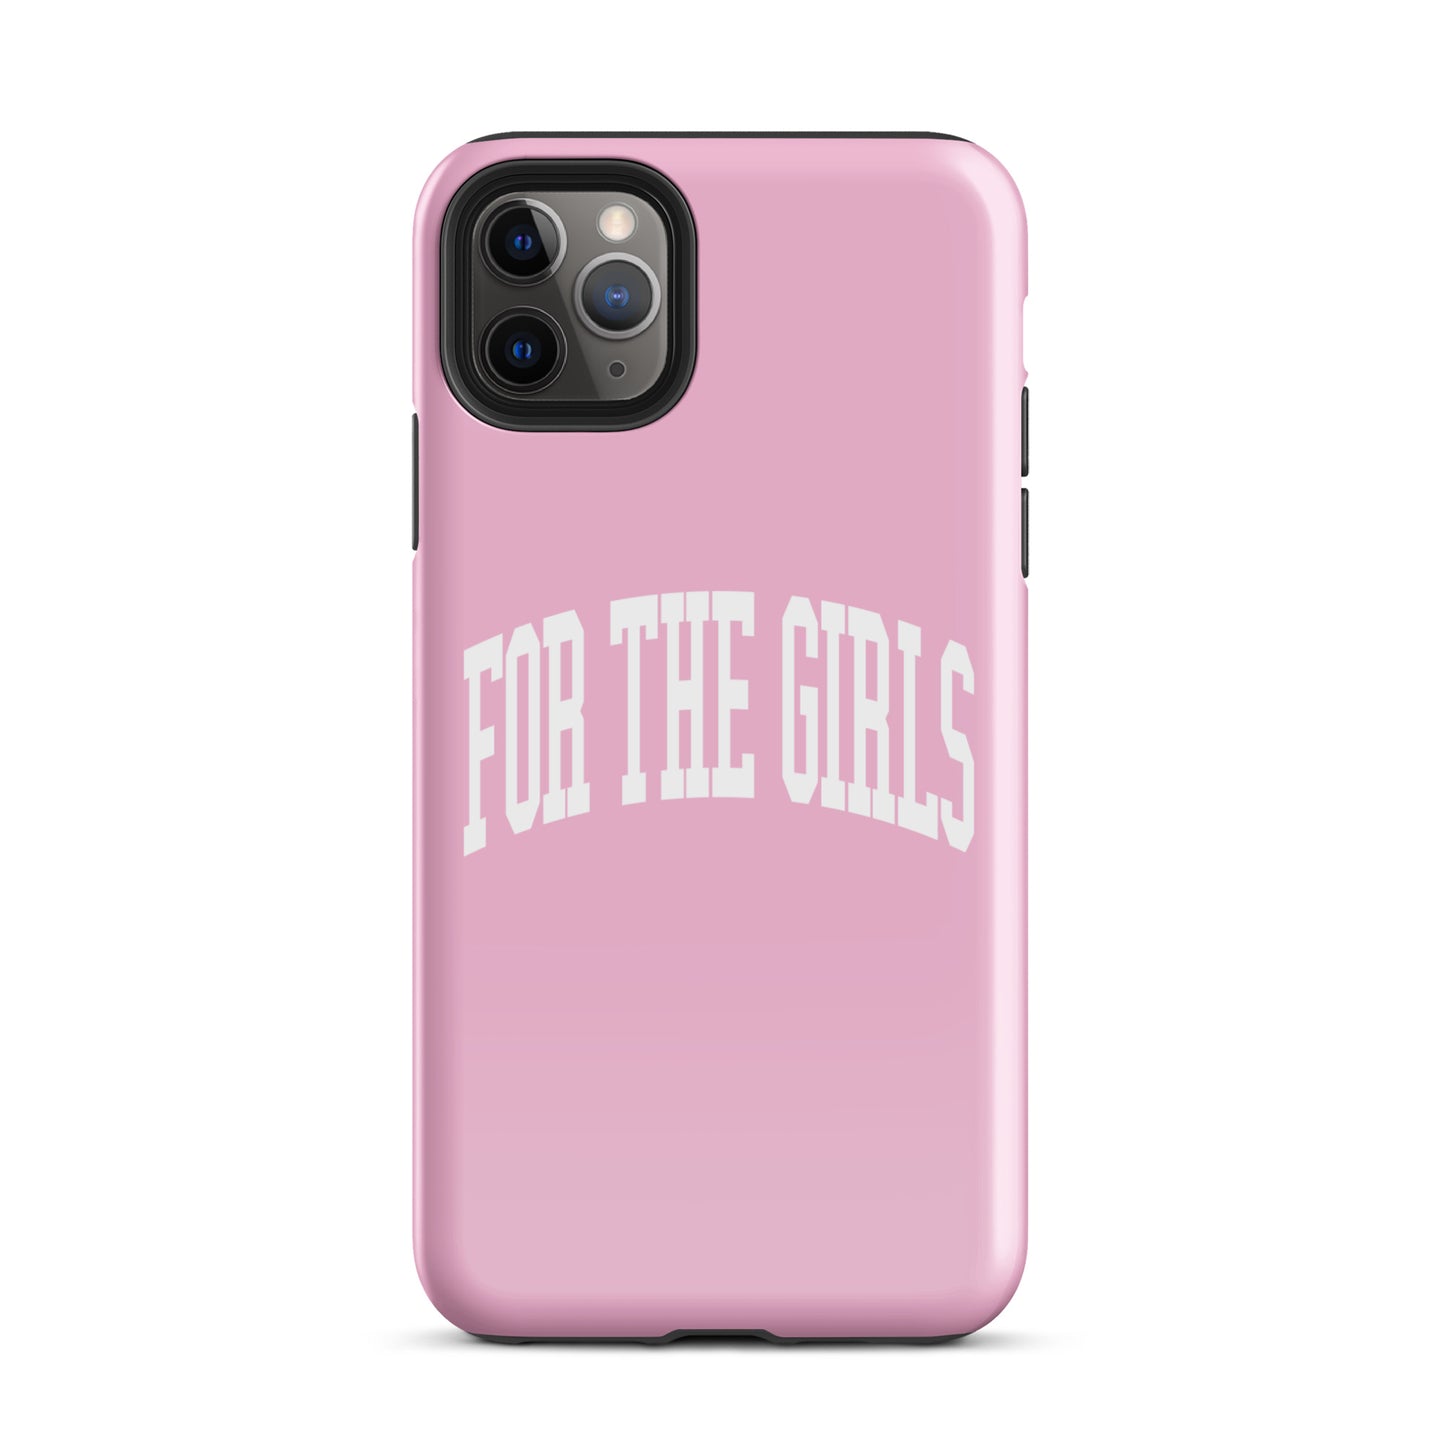 Adelaine Morin: For The Girls iPhone Case